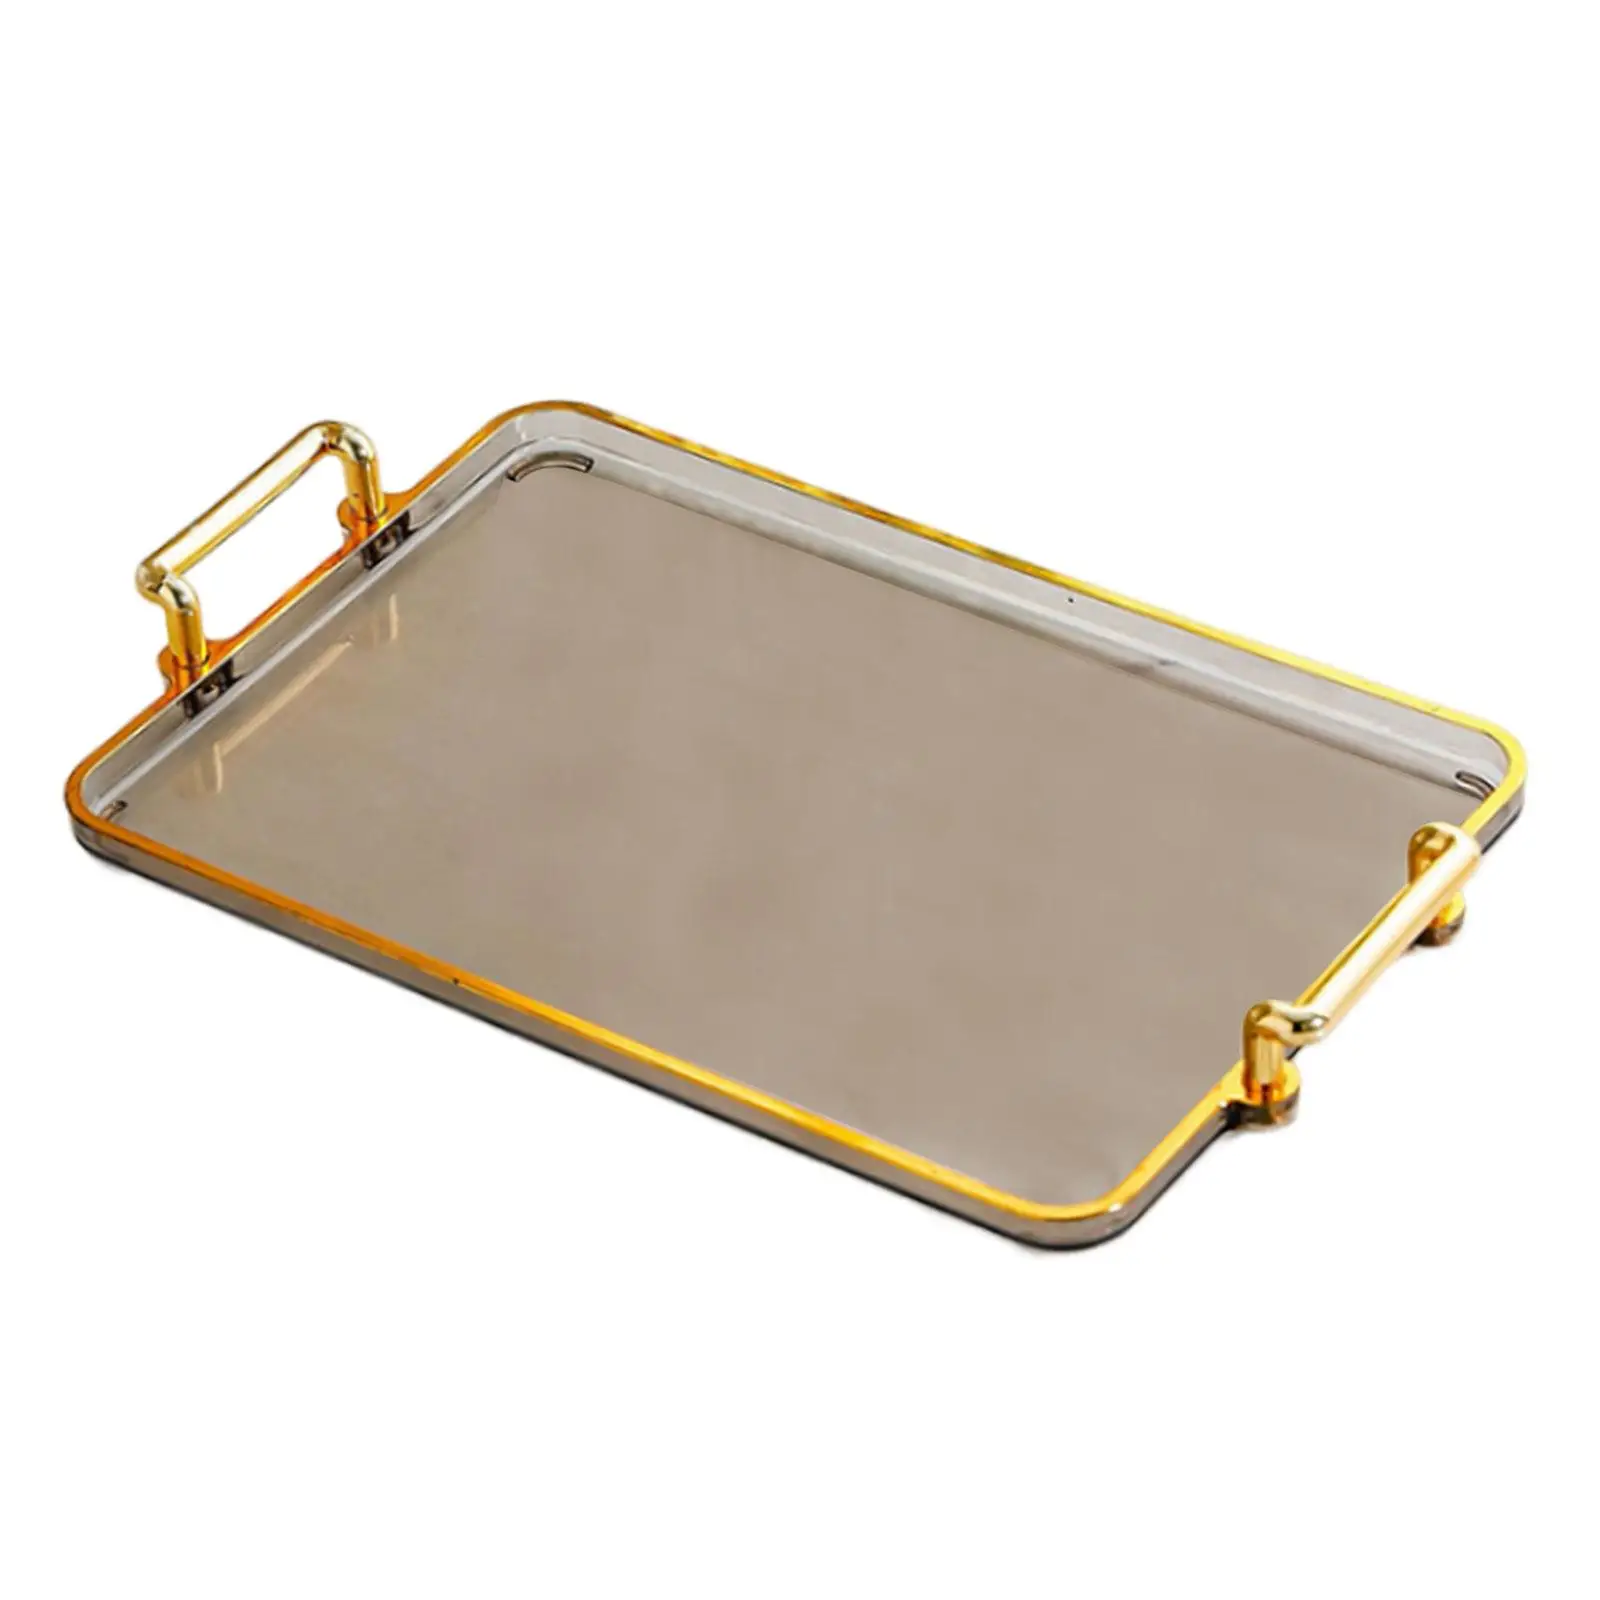 Serving Platter Eating Tray for Indoor Outdoor Parties Practical Multipurpose